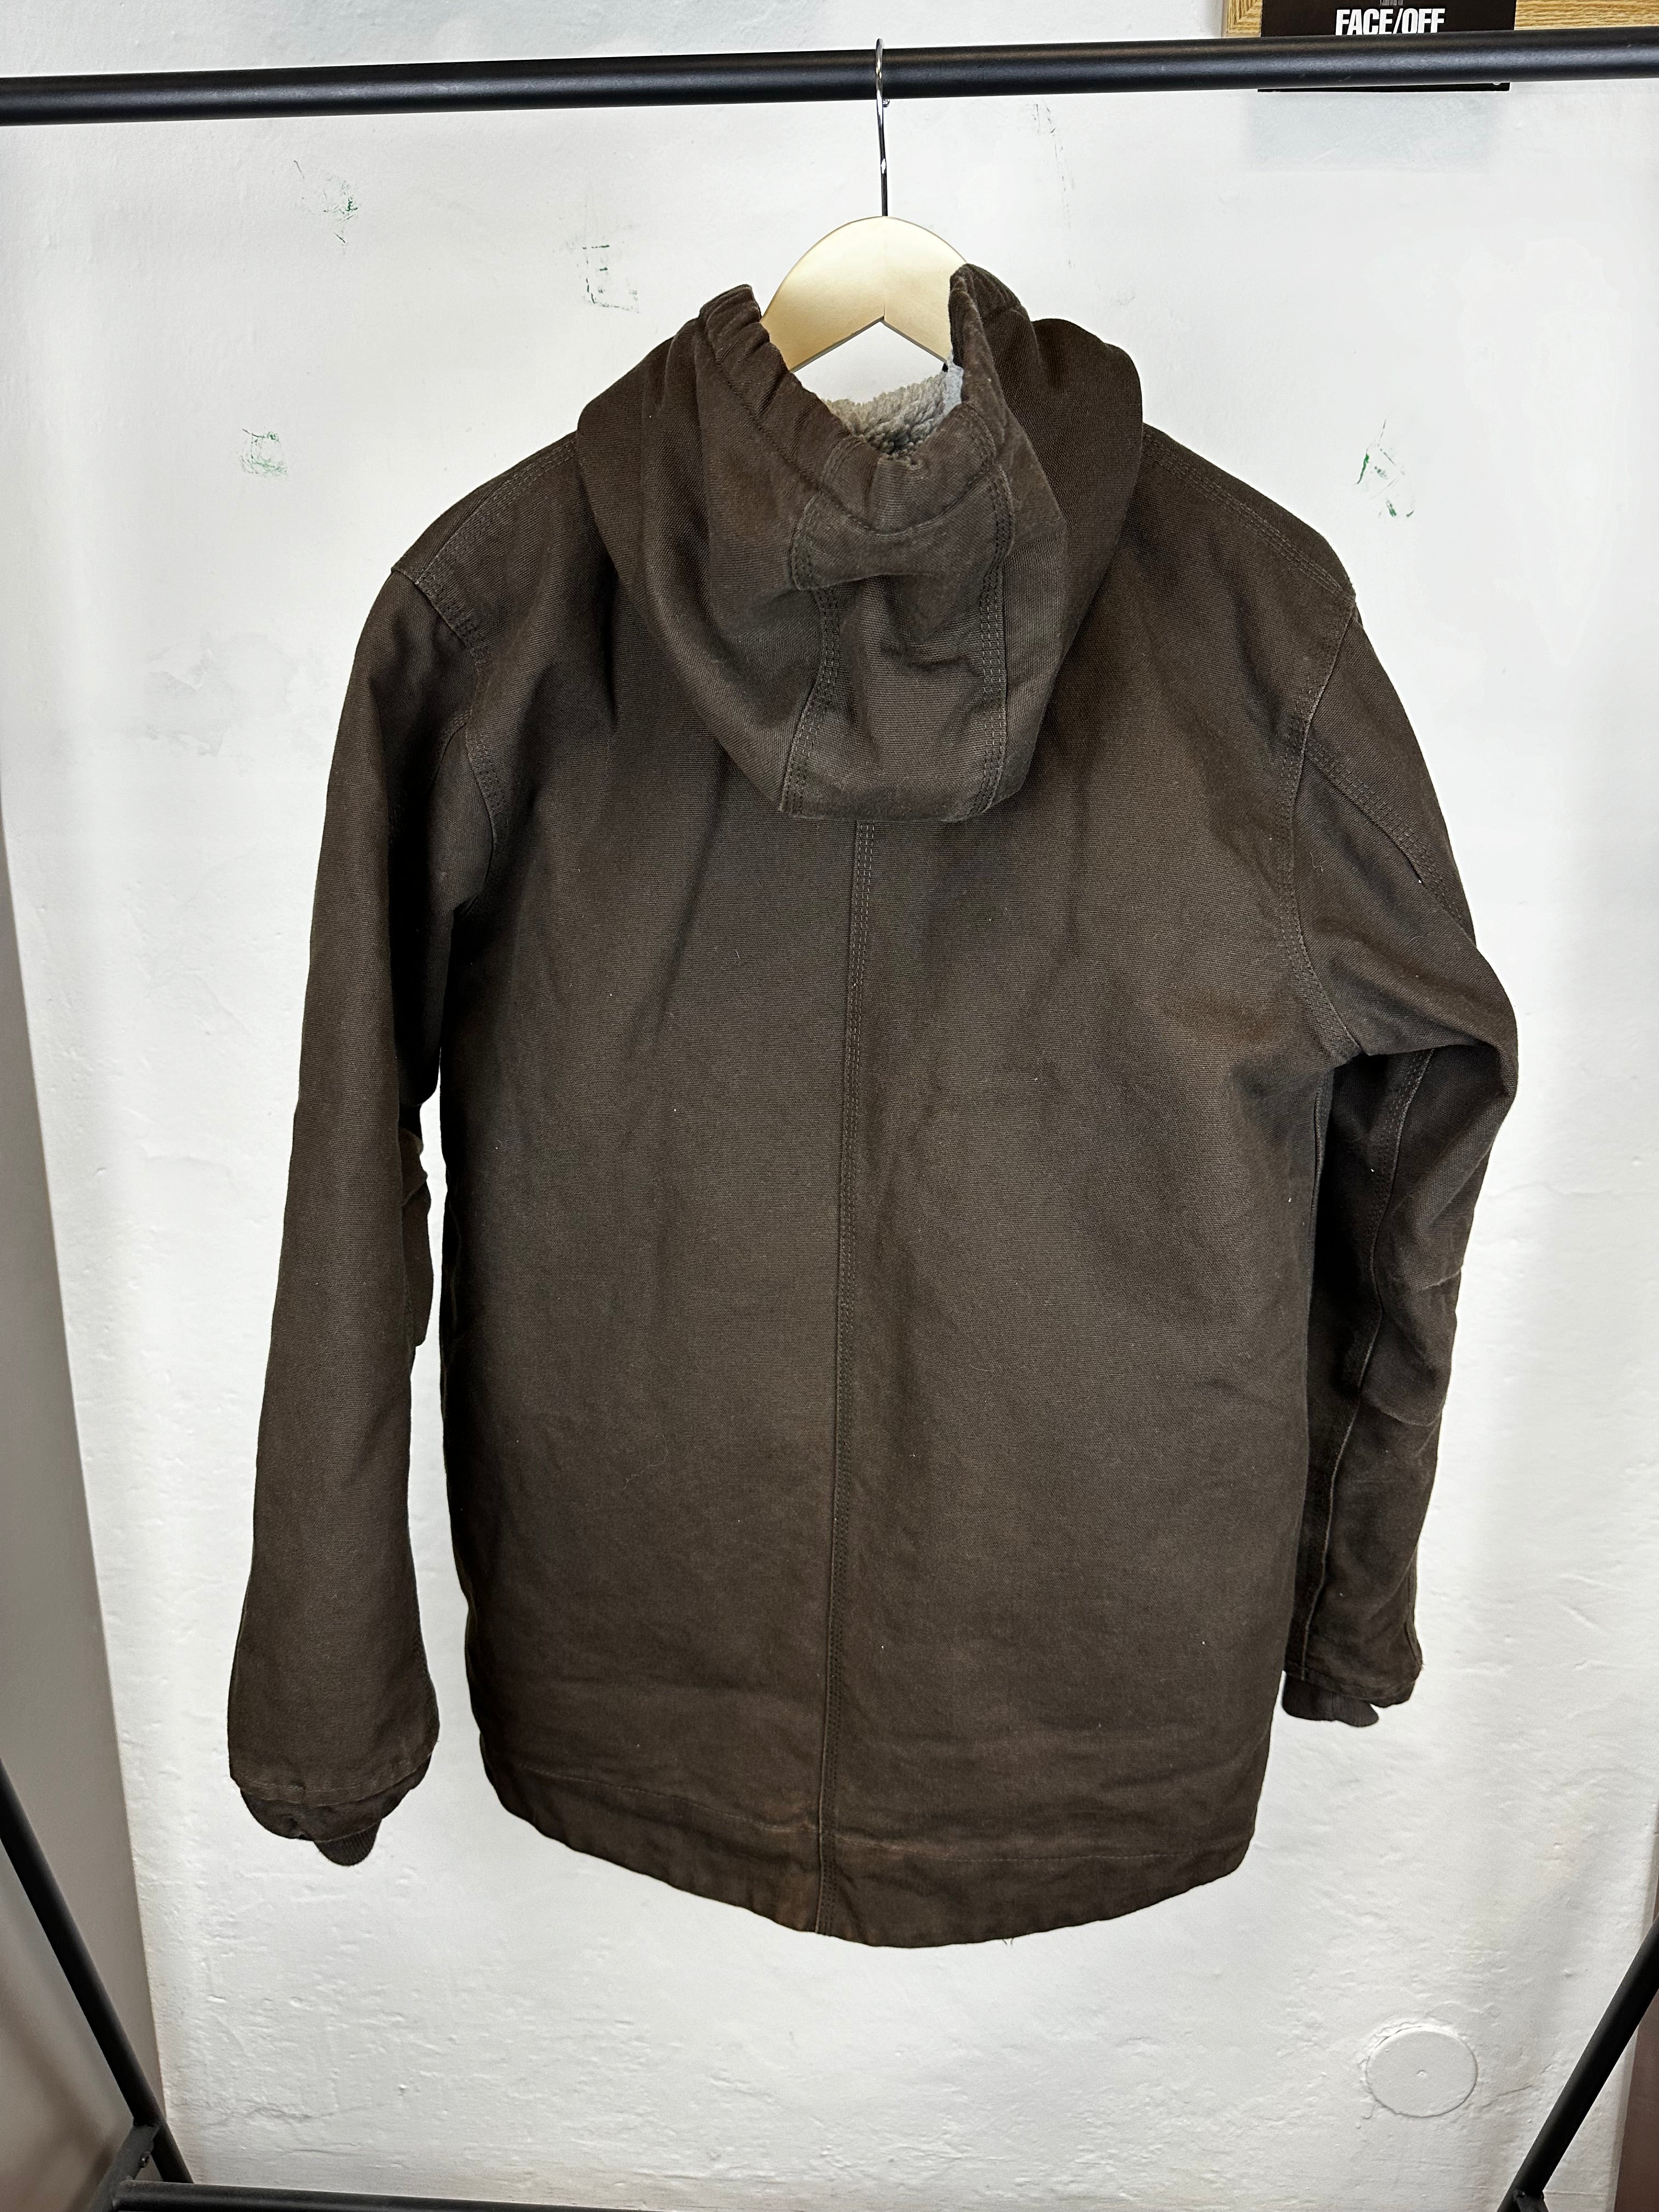 Vintage Carhartt Winter Jacket - size M